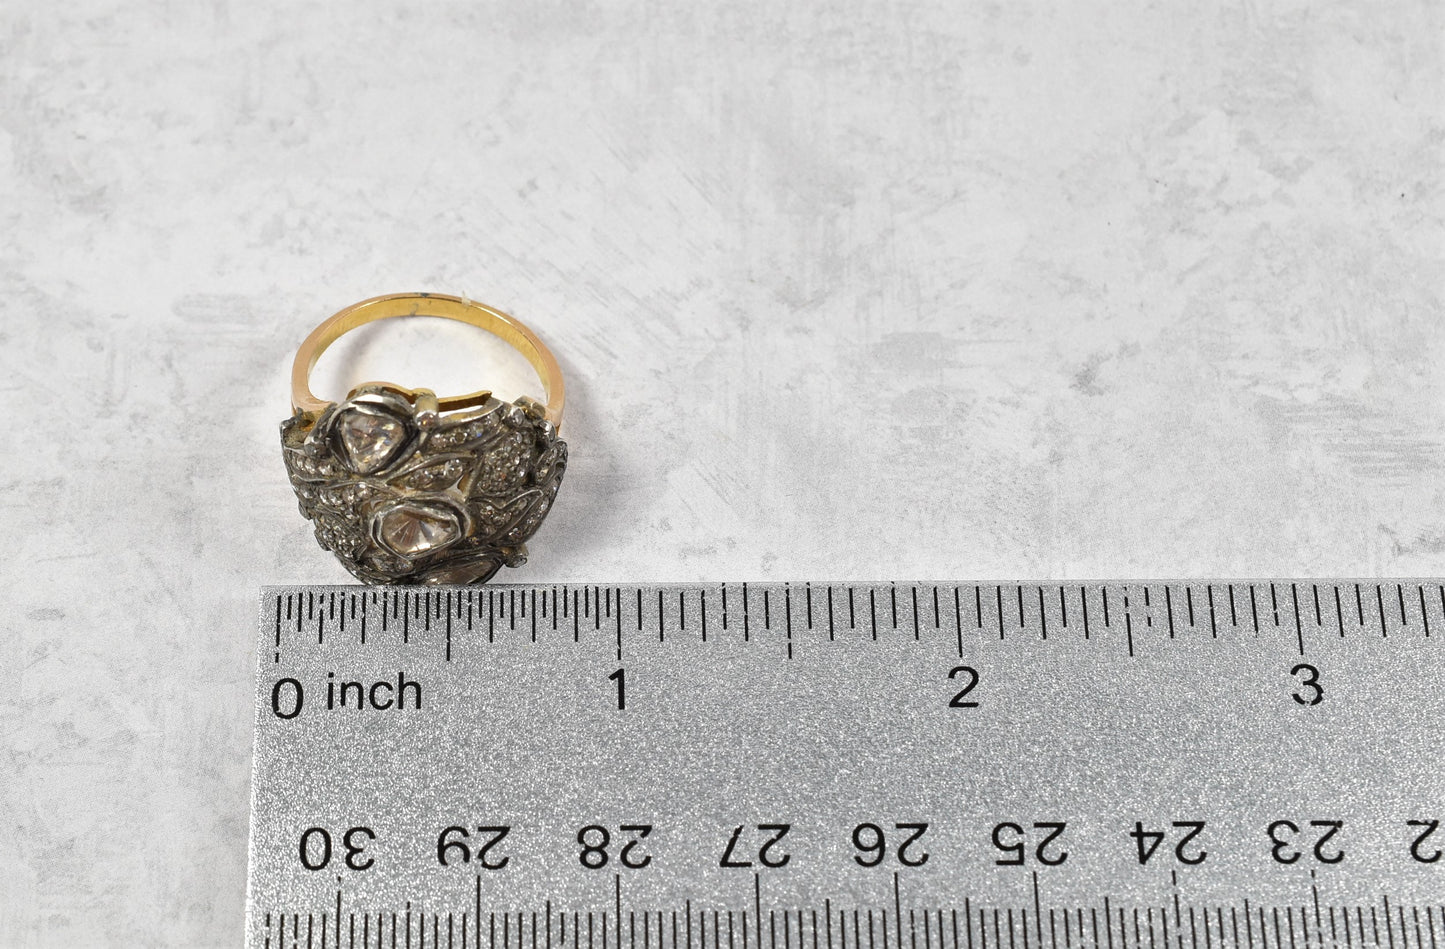 Antique 14k Yellow Gold & Platinum Victorian Diamond Cluster Ring, Size 8.75 - 6.2g